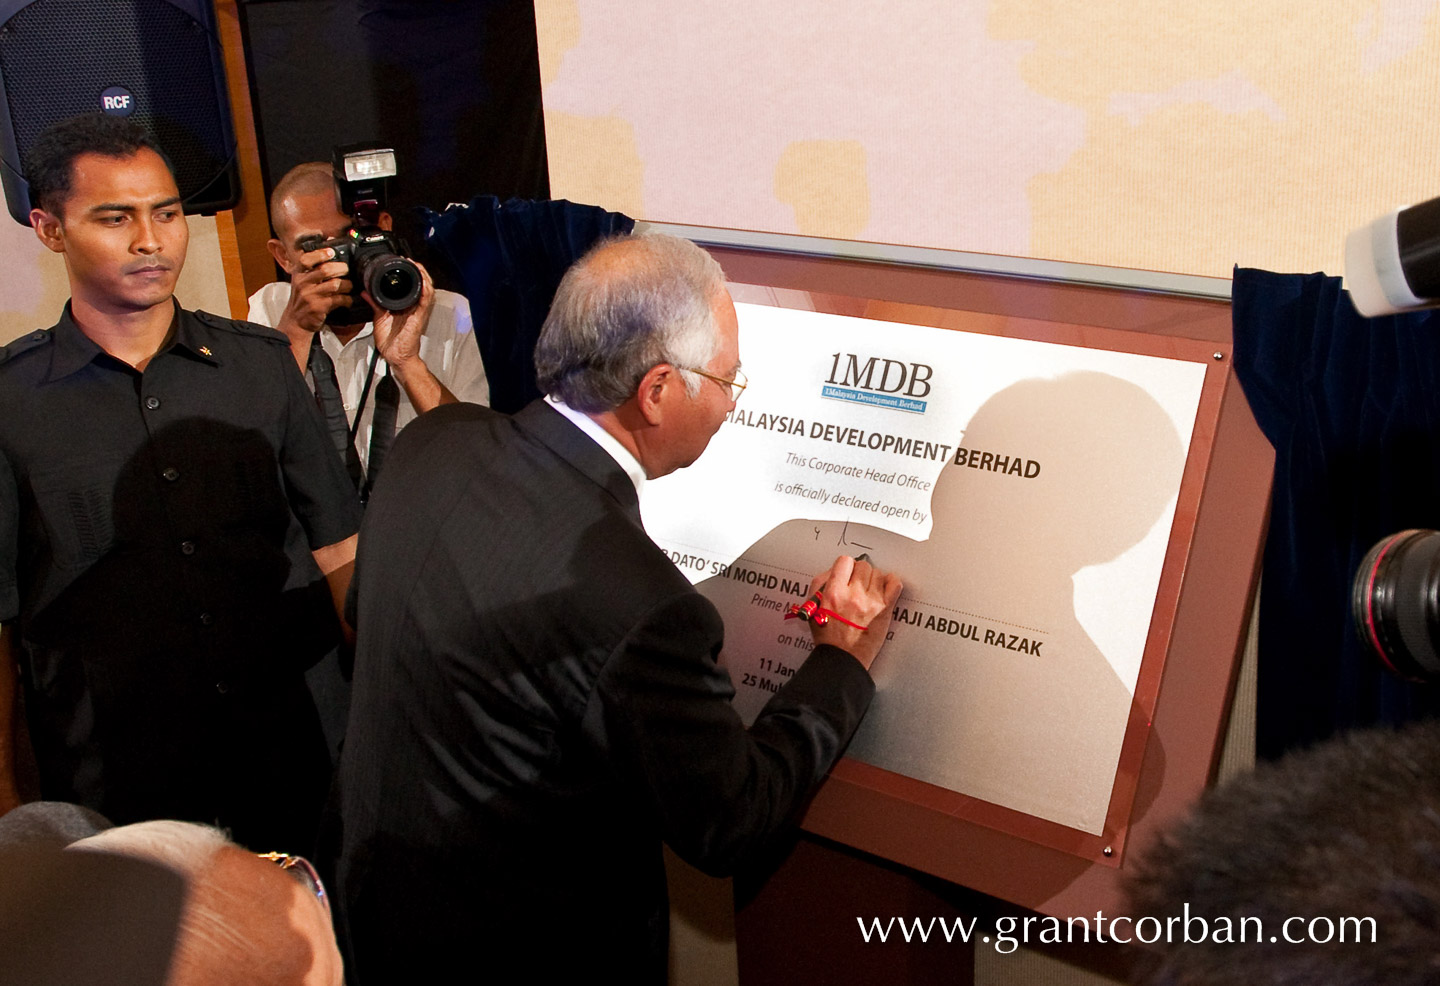 Malaysian PM Dato Sri Haji Najib Tun Razak speech 1MDB Head Office Launch in Menara IMC